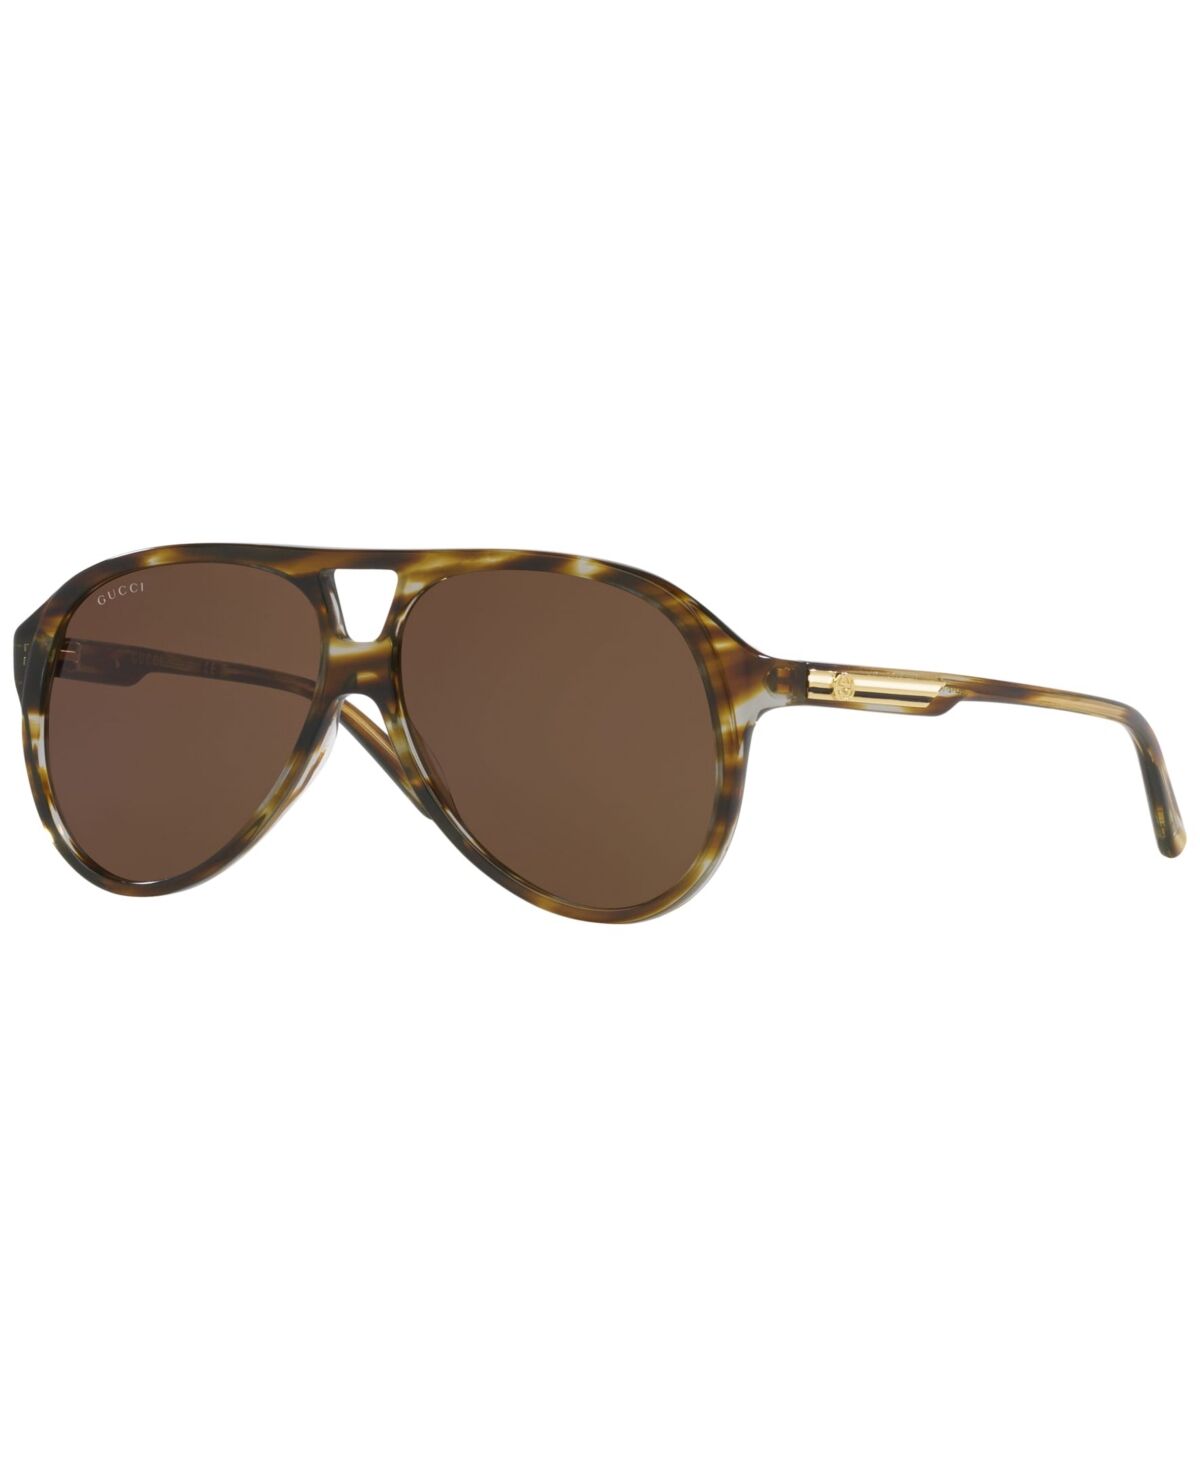 Gucci Men's GG1286S Sunglasses GC002067 - Tortoise